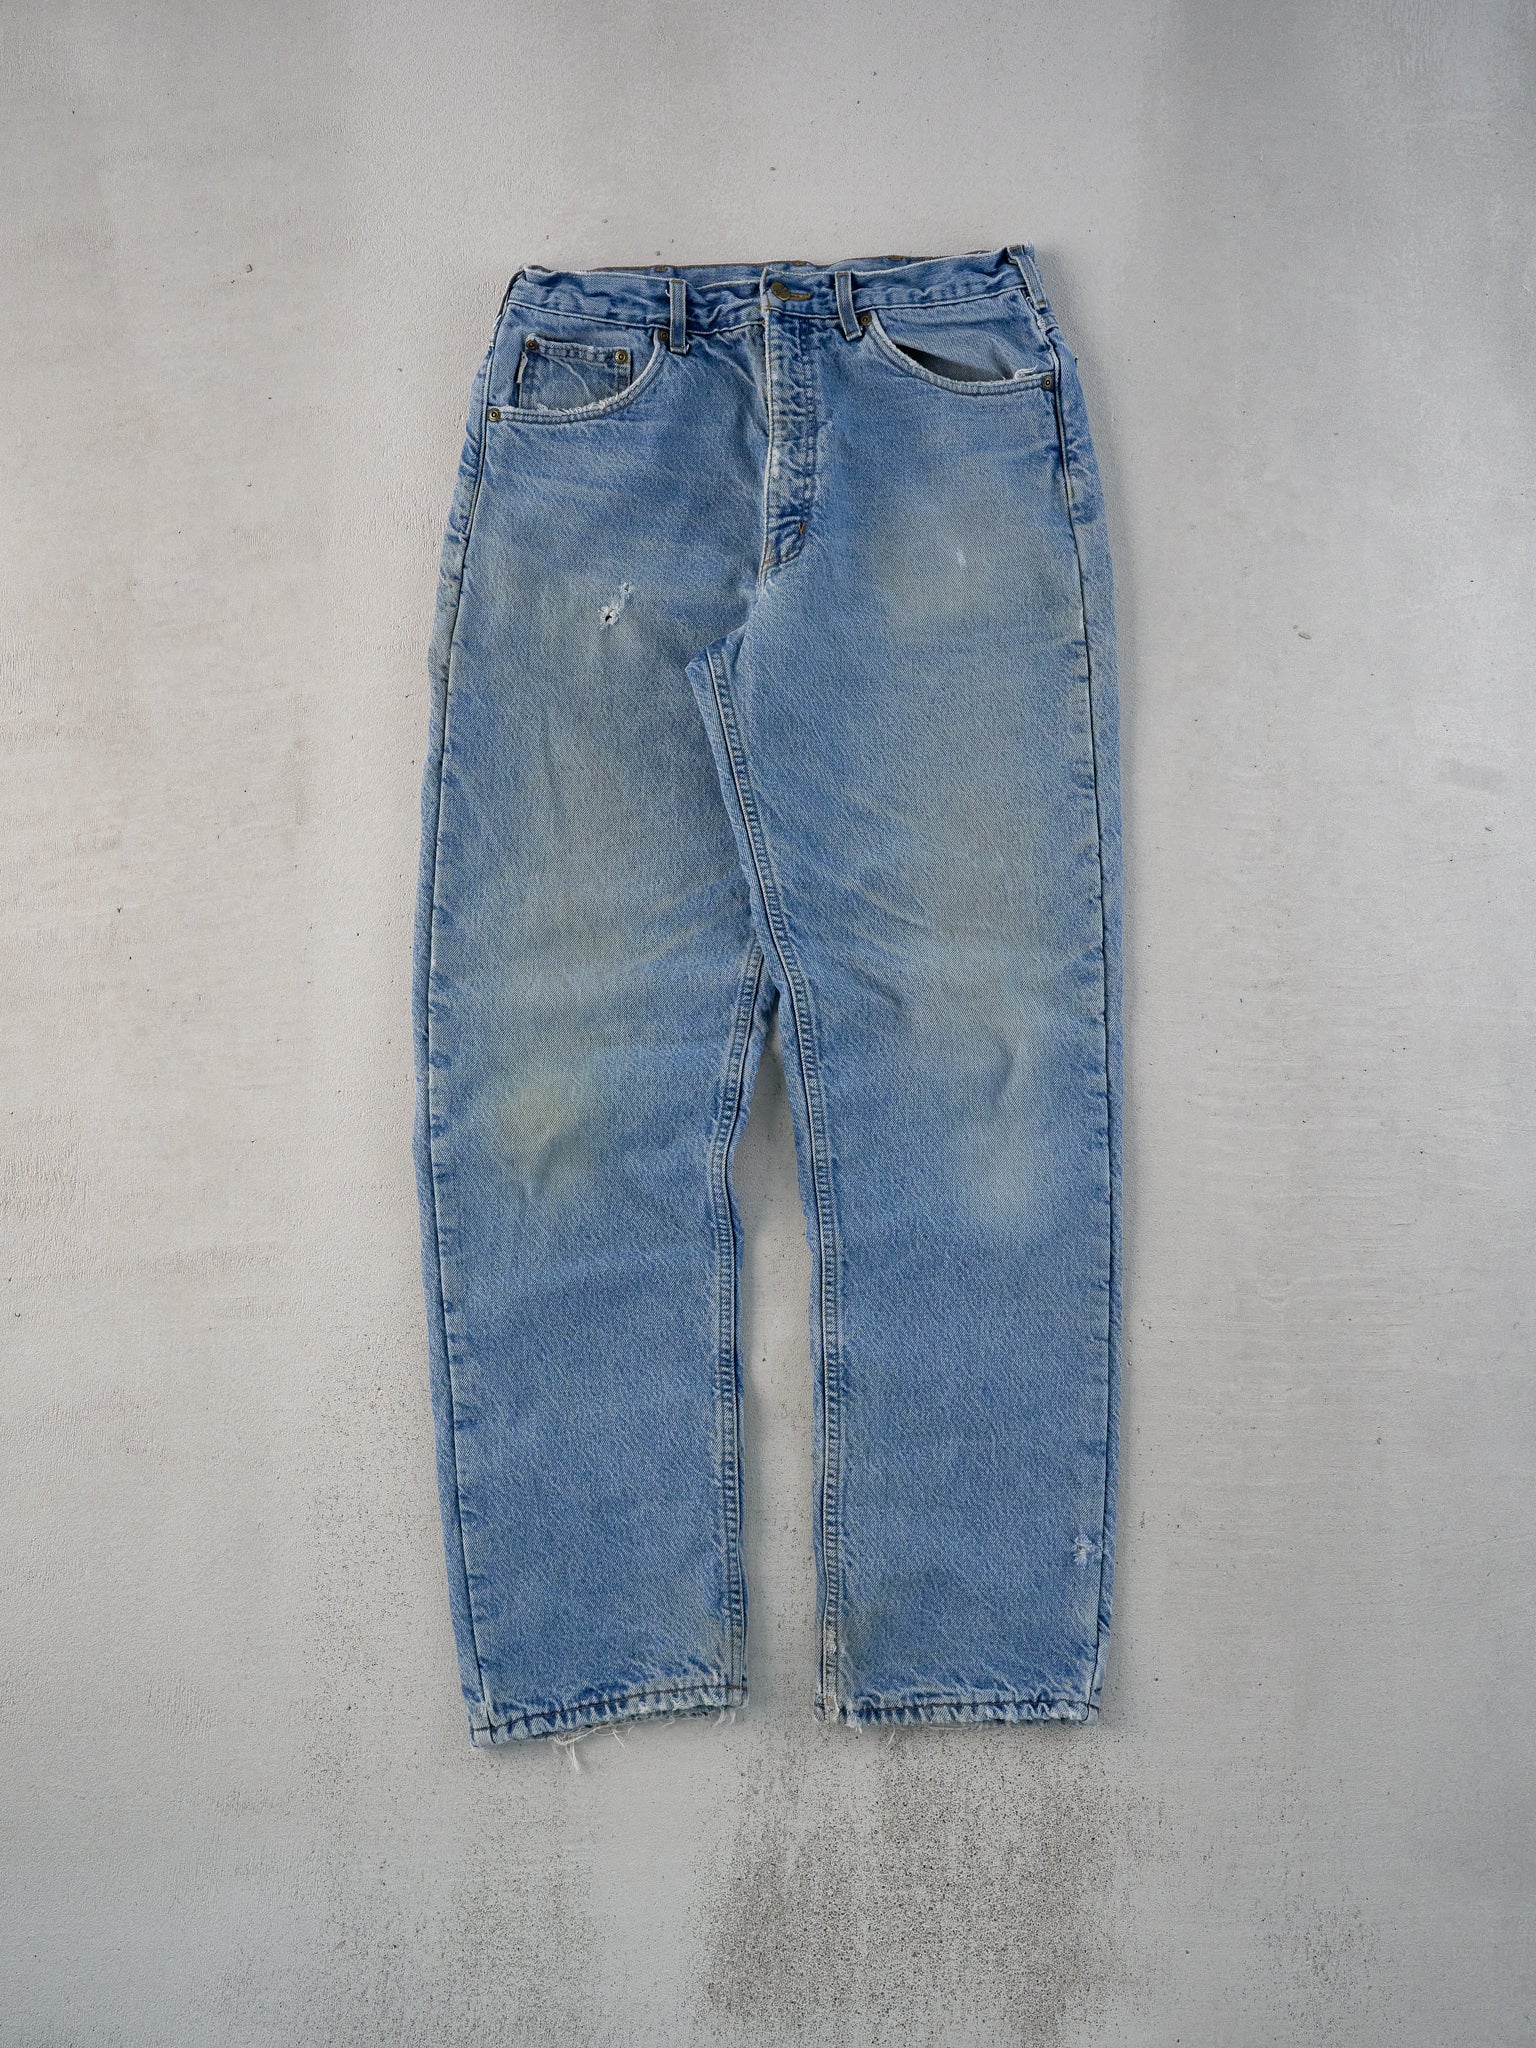 Vintage 90s Light Blue Carhartt Lined Denim Carpenter Pants (32x32)